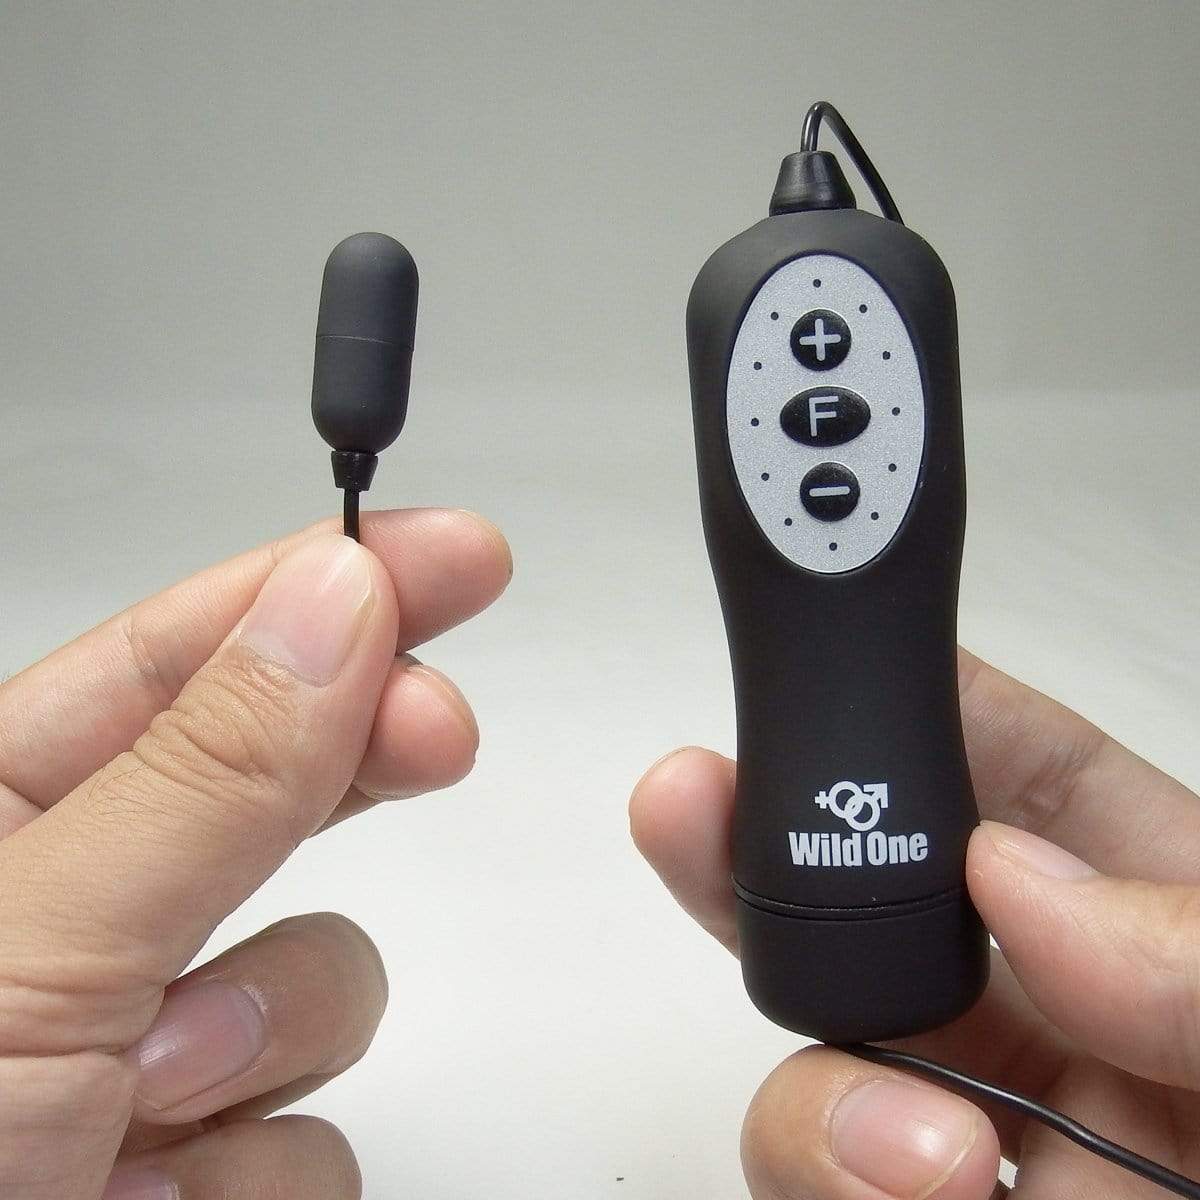 SSI Japan - Kuro Roter Nano Mini Bullet Egg Massager (Black) SSI1032 CherryAffairs